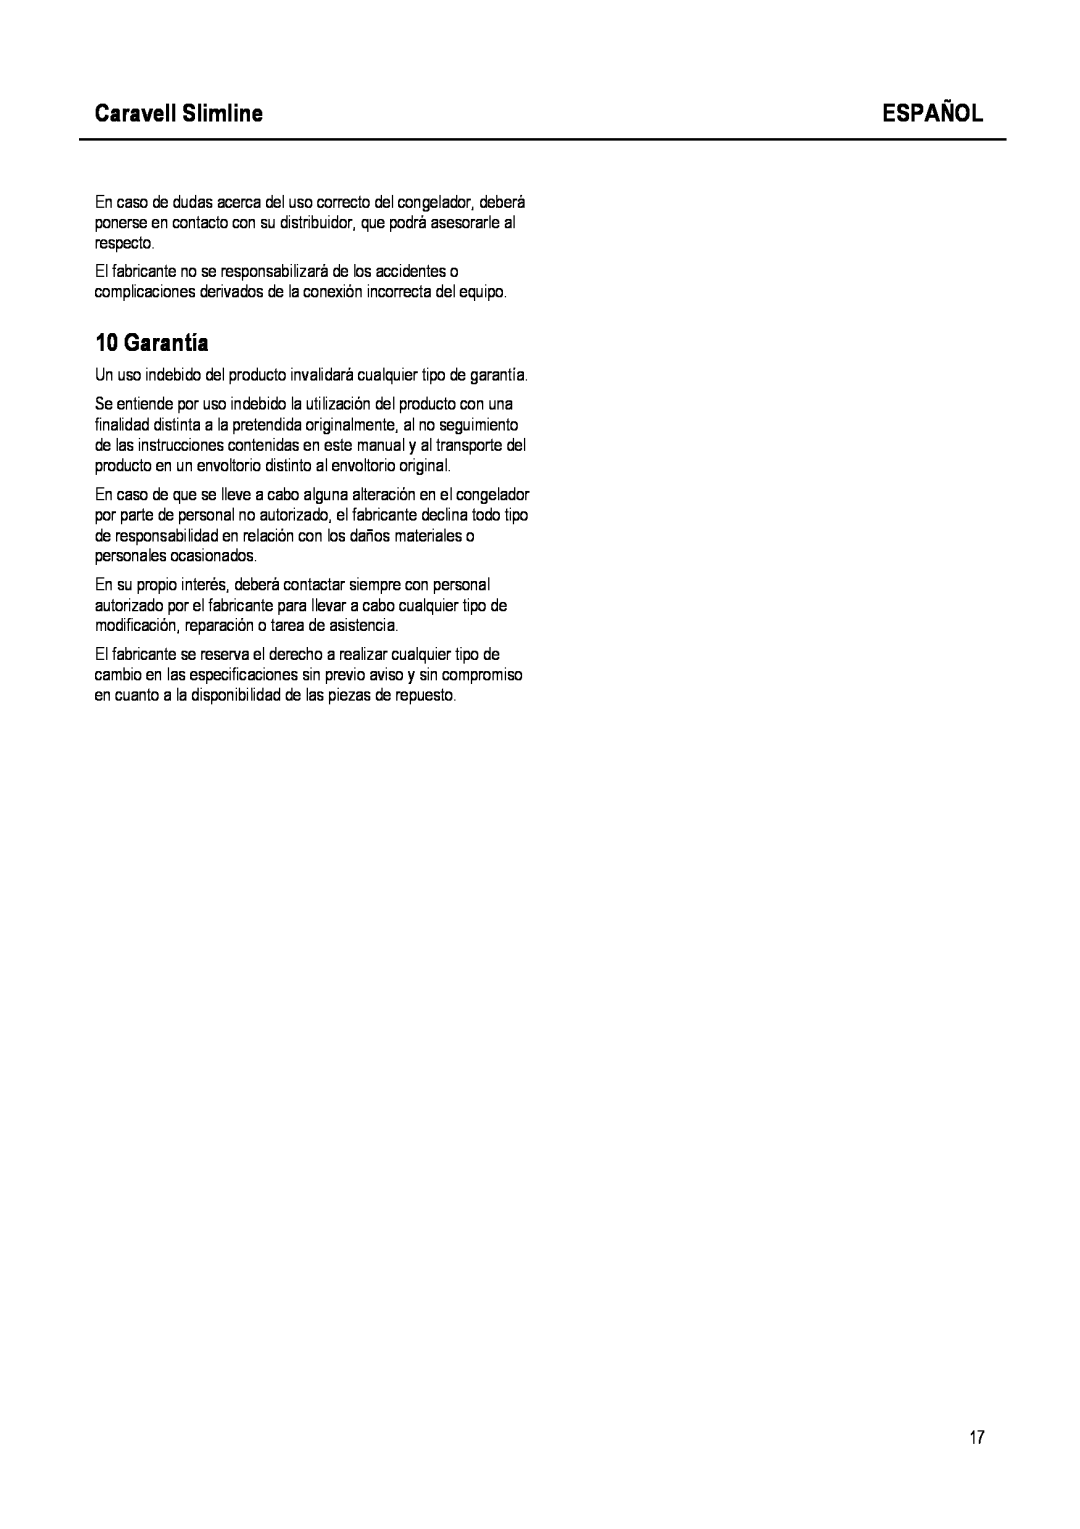 Caravell SLC 168 instruction manual Garantía, Caravell Slimline, Español 